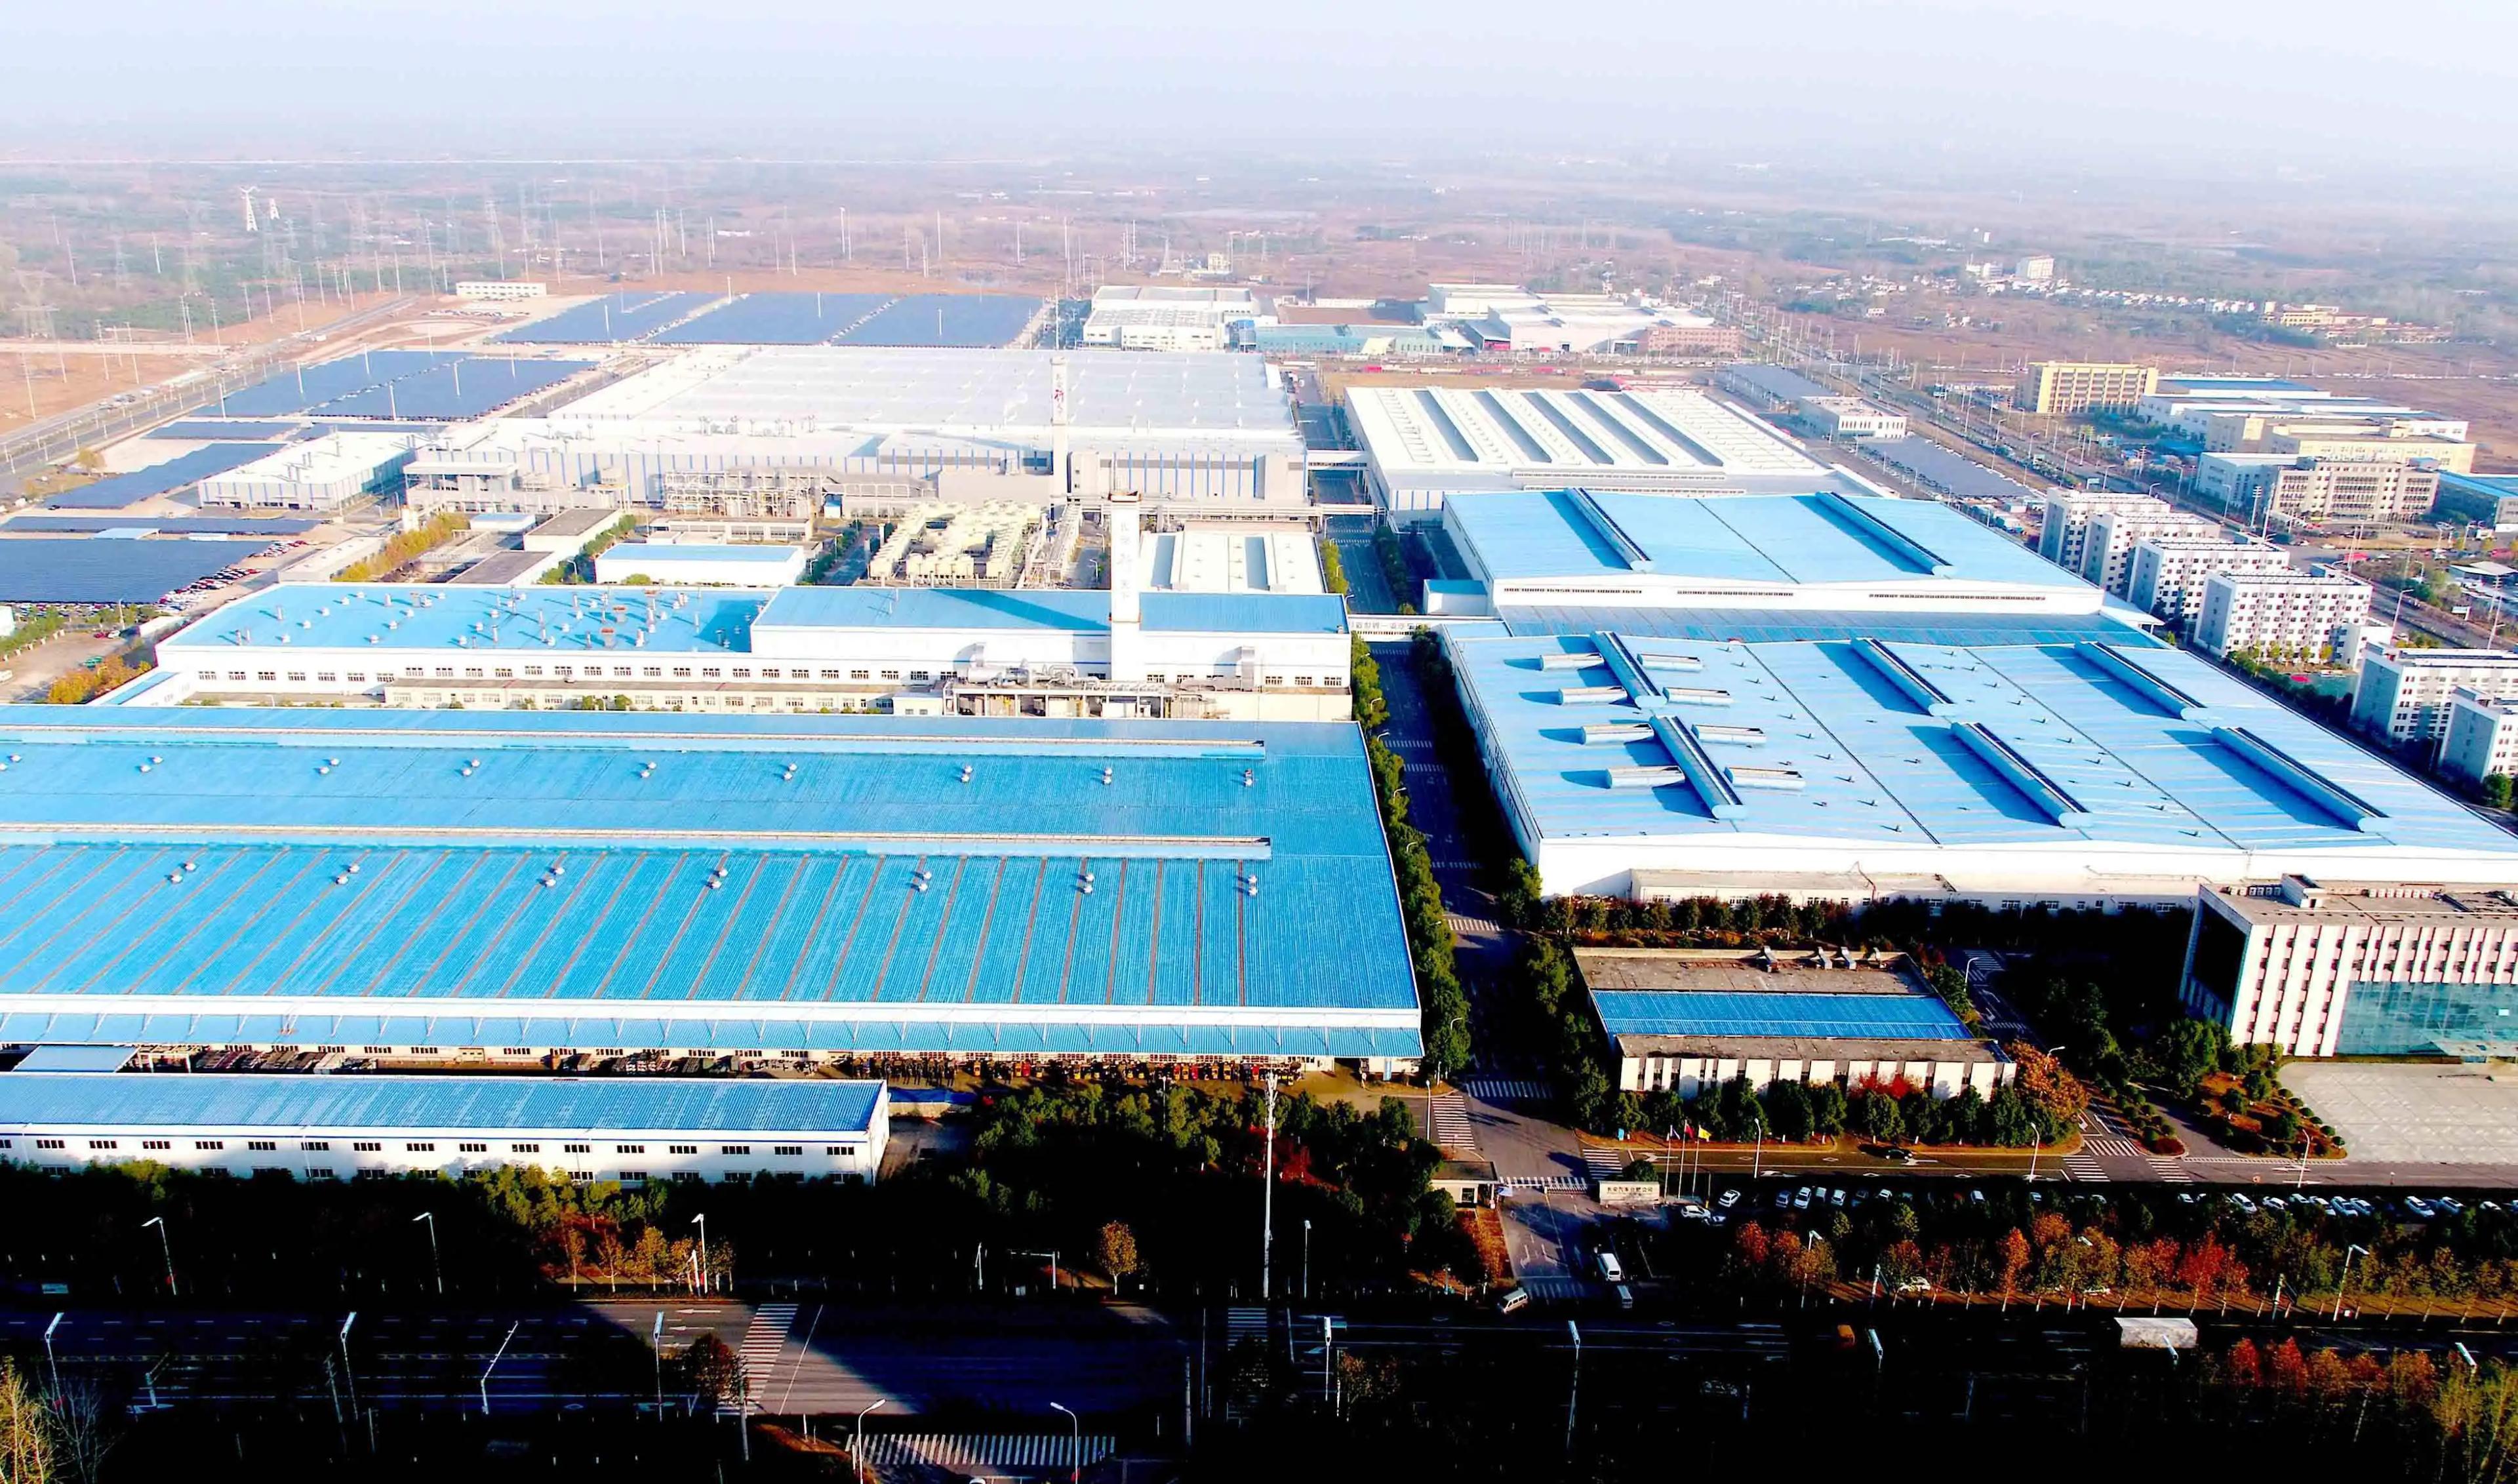 Jisedaimolding Technology Dalian Co., Ltd.